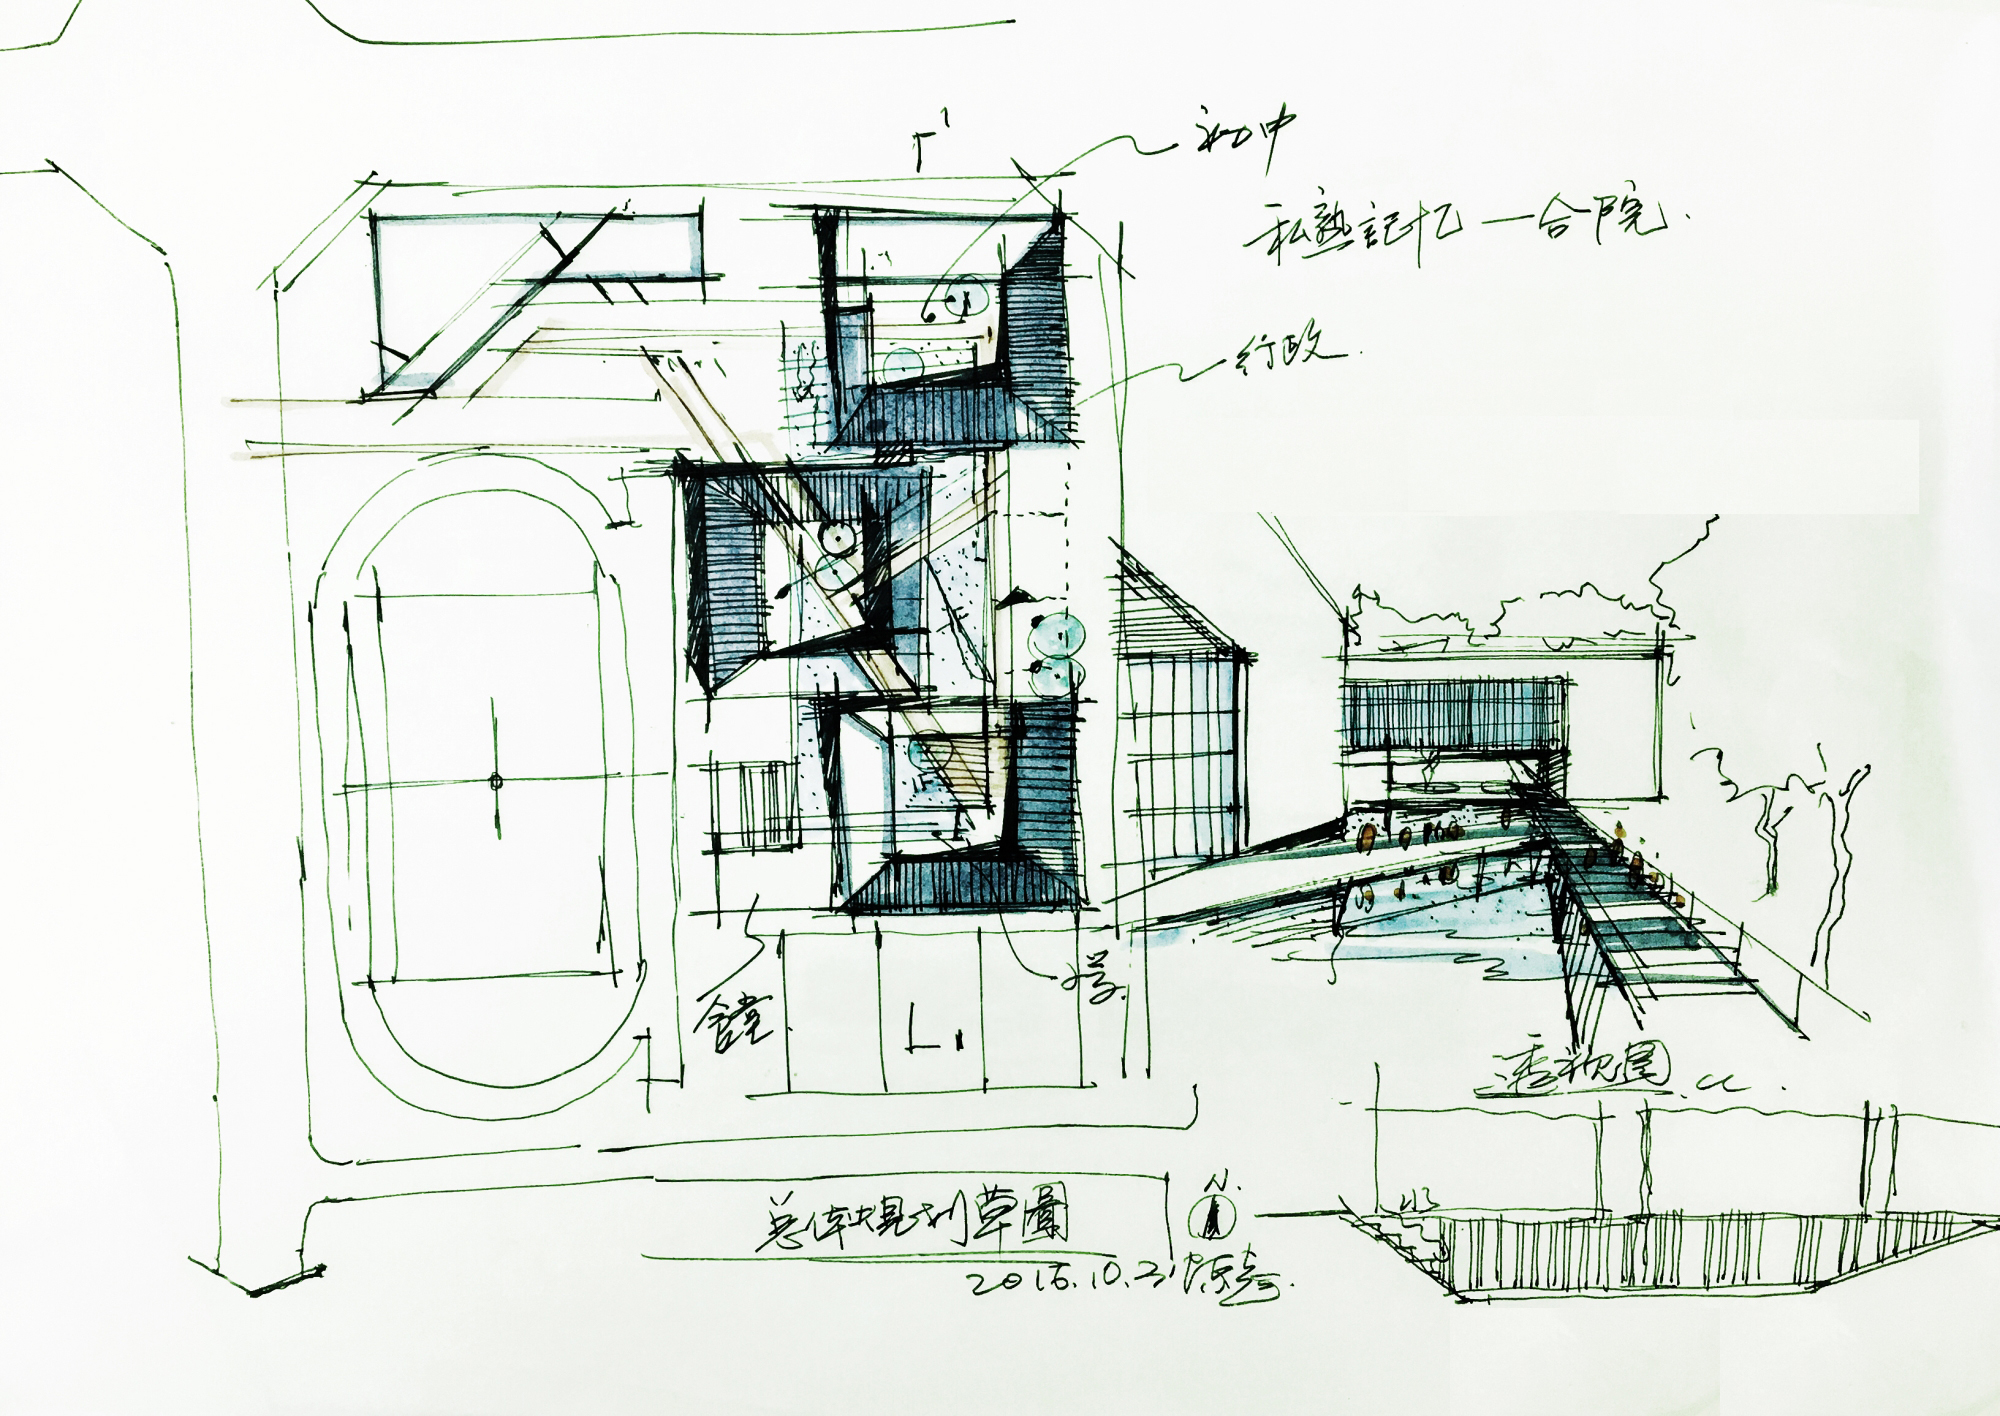 围合规划草图-Enclosed planning sketch-UA尤安设计.jpg